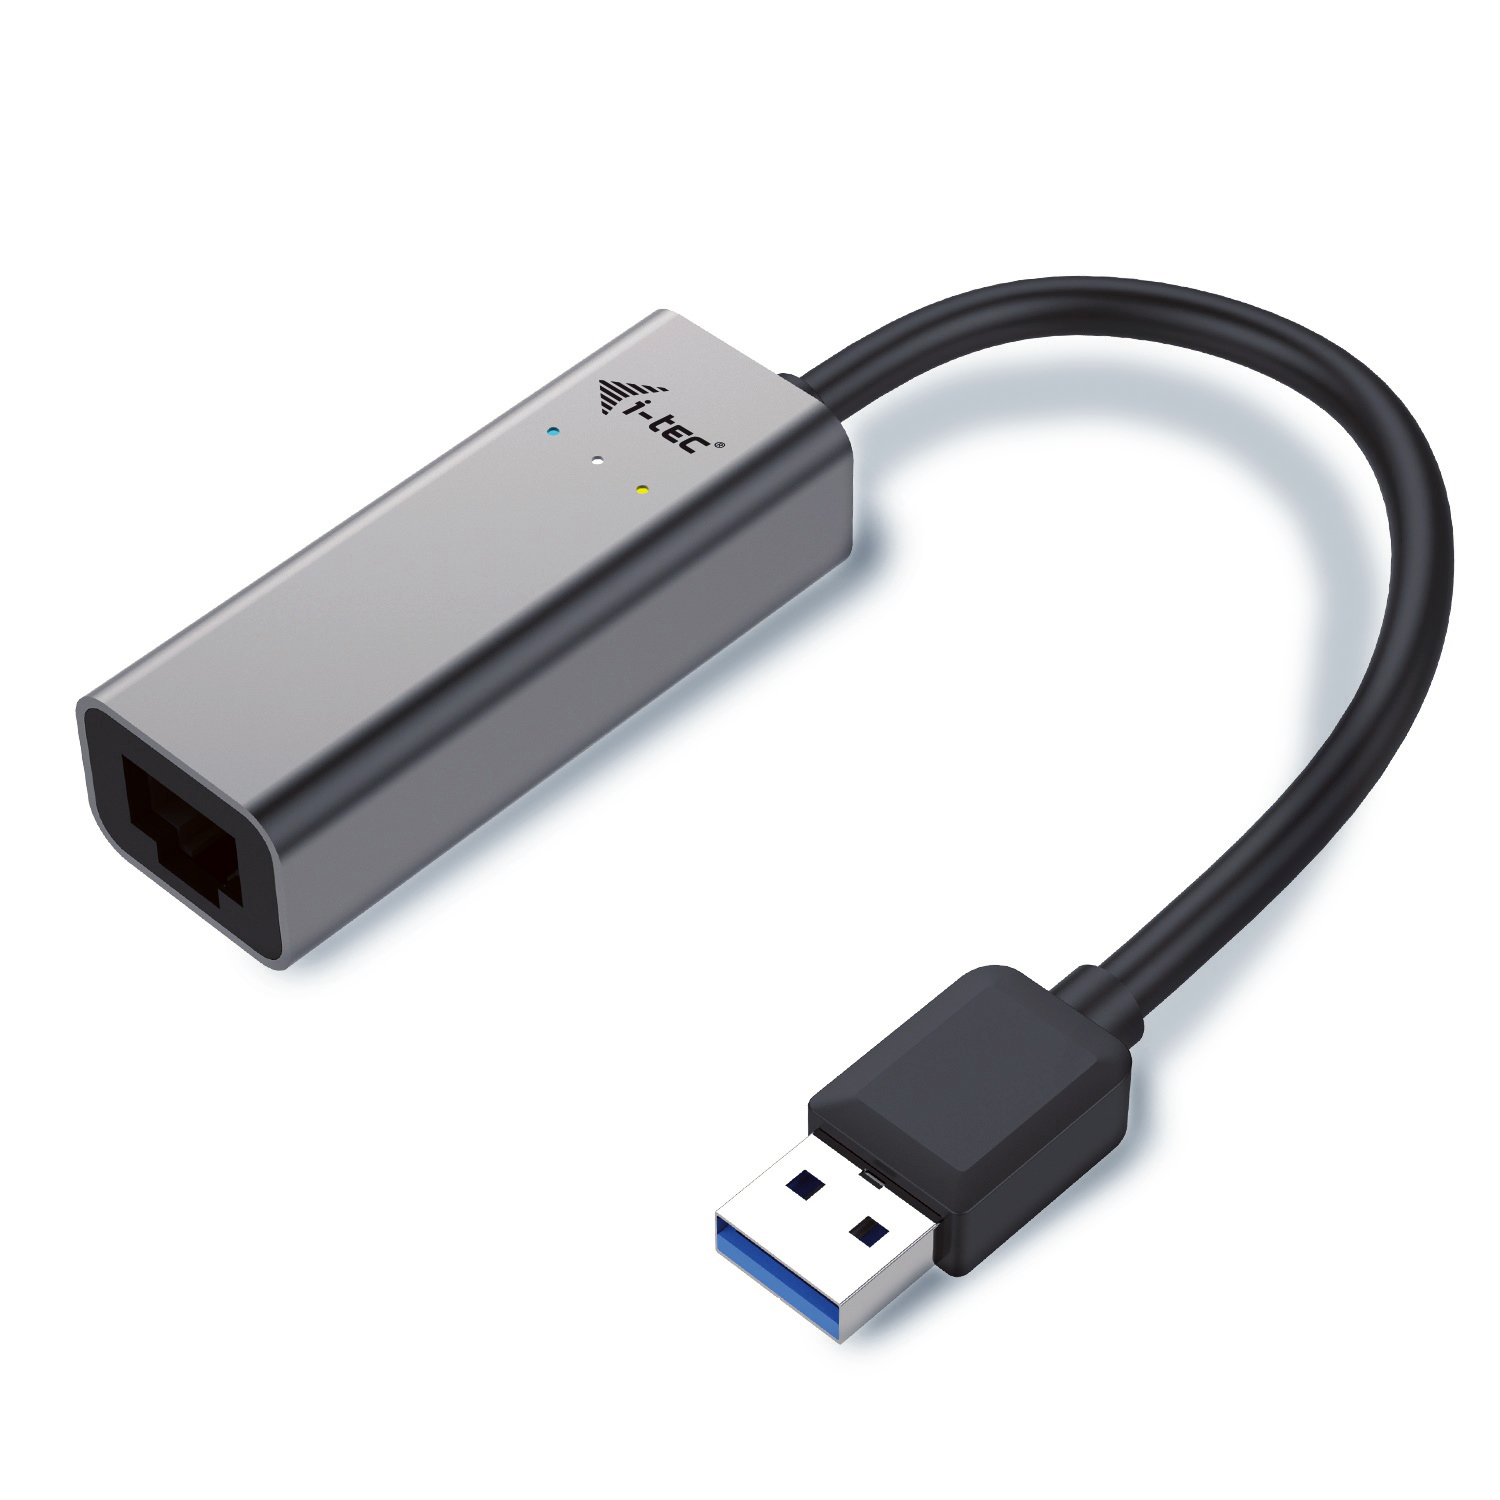 i-tec USB 3.0 Metal Gigabit Ethernet Adapter0 